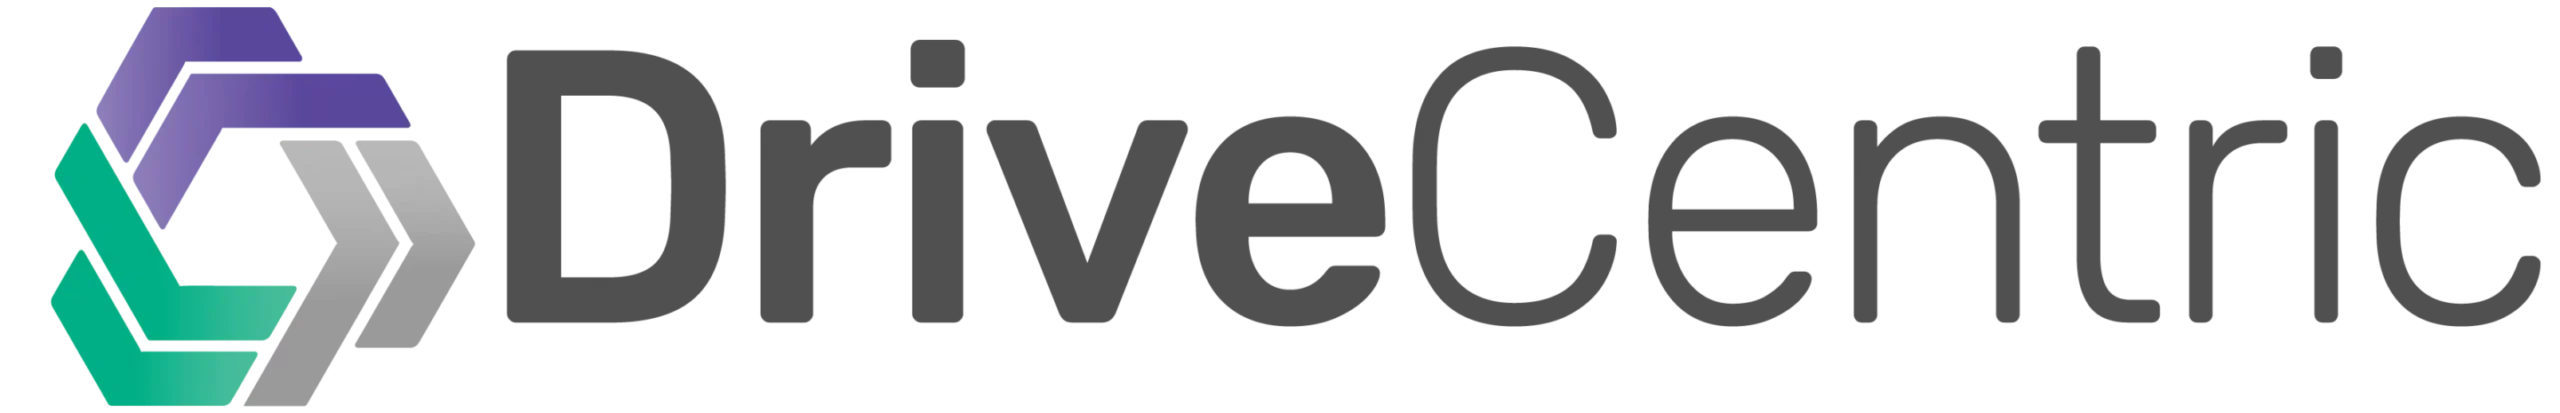 DriveCentric-Logo-RGB.png